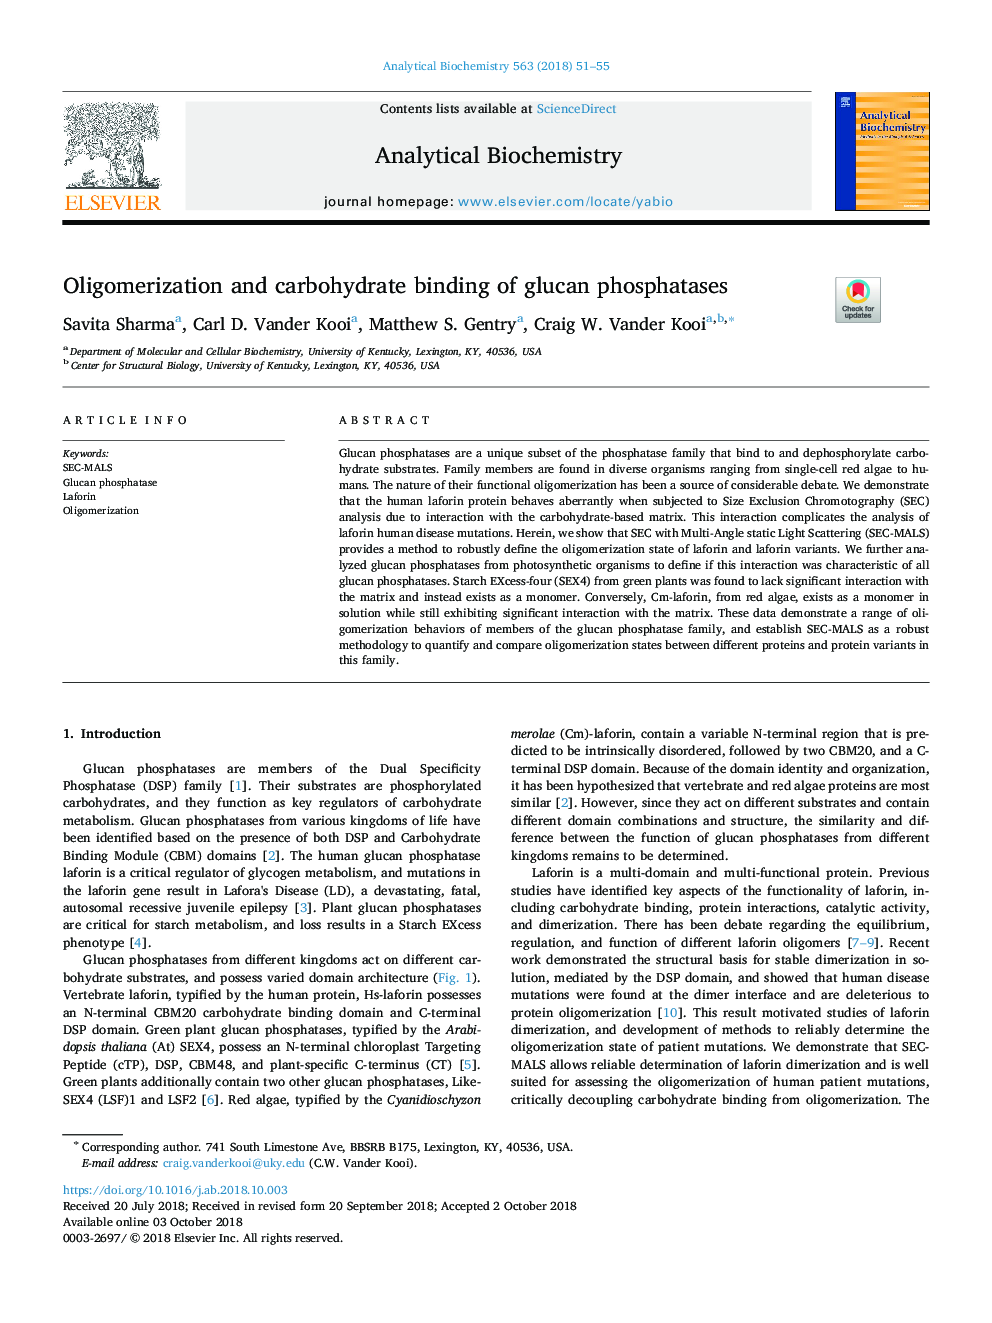 Oligomerization and carbohydrate binding of glucan phosphatases